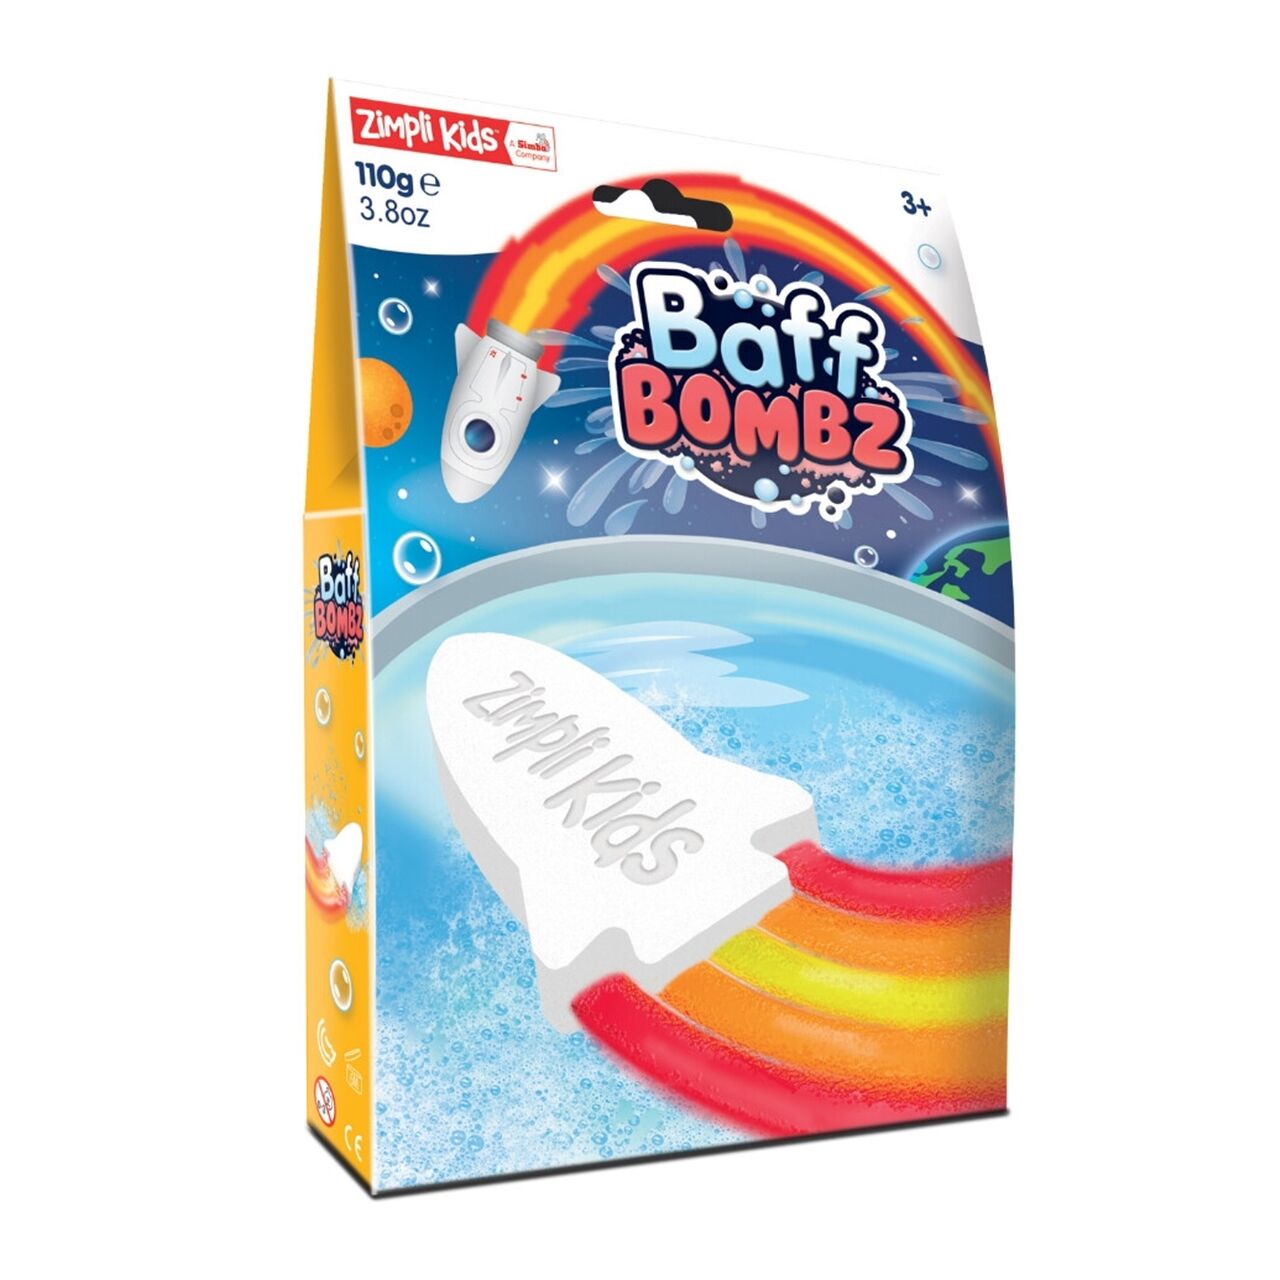 Special Effect Baff Bombz - Rocket